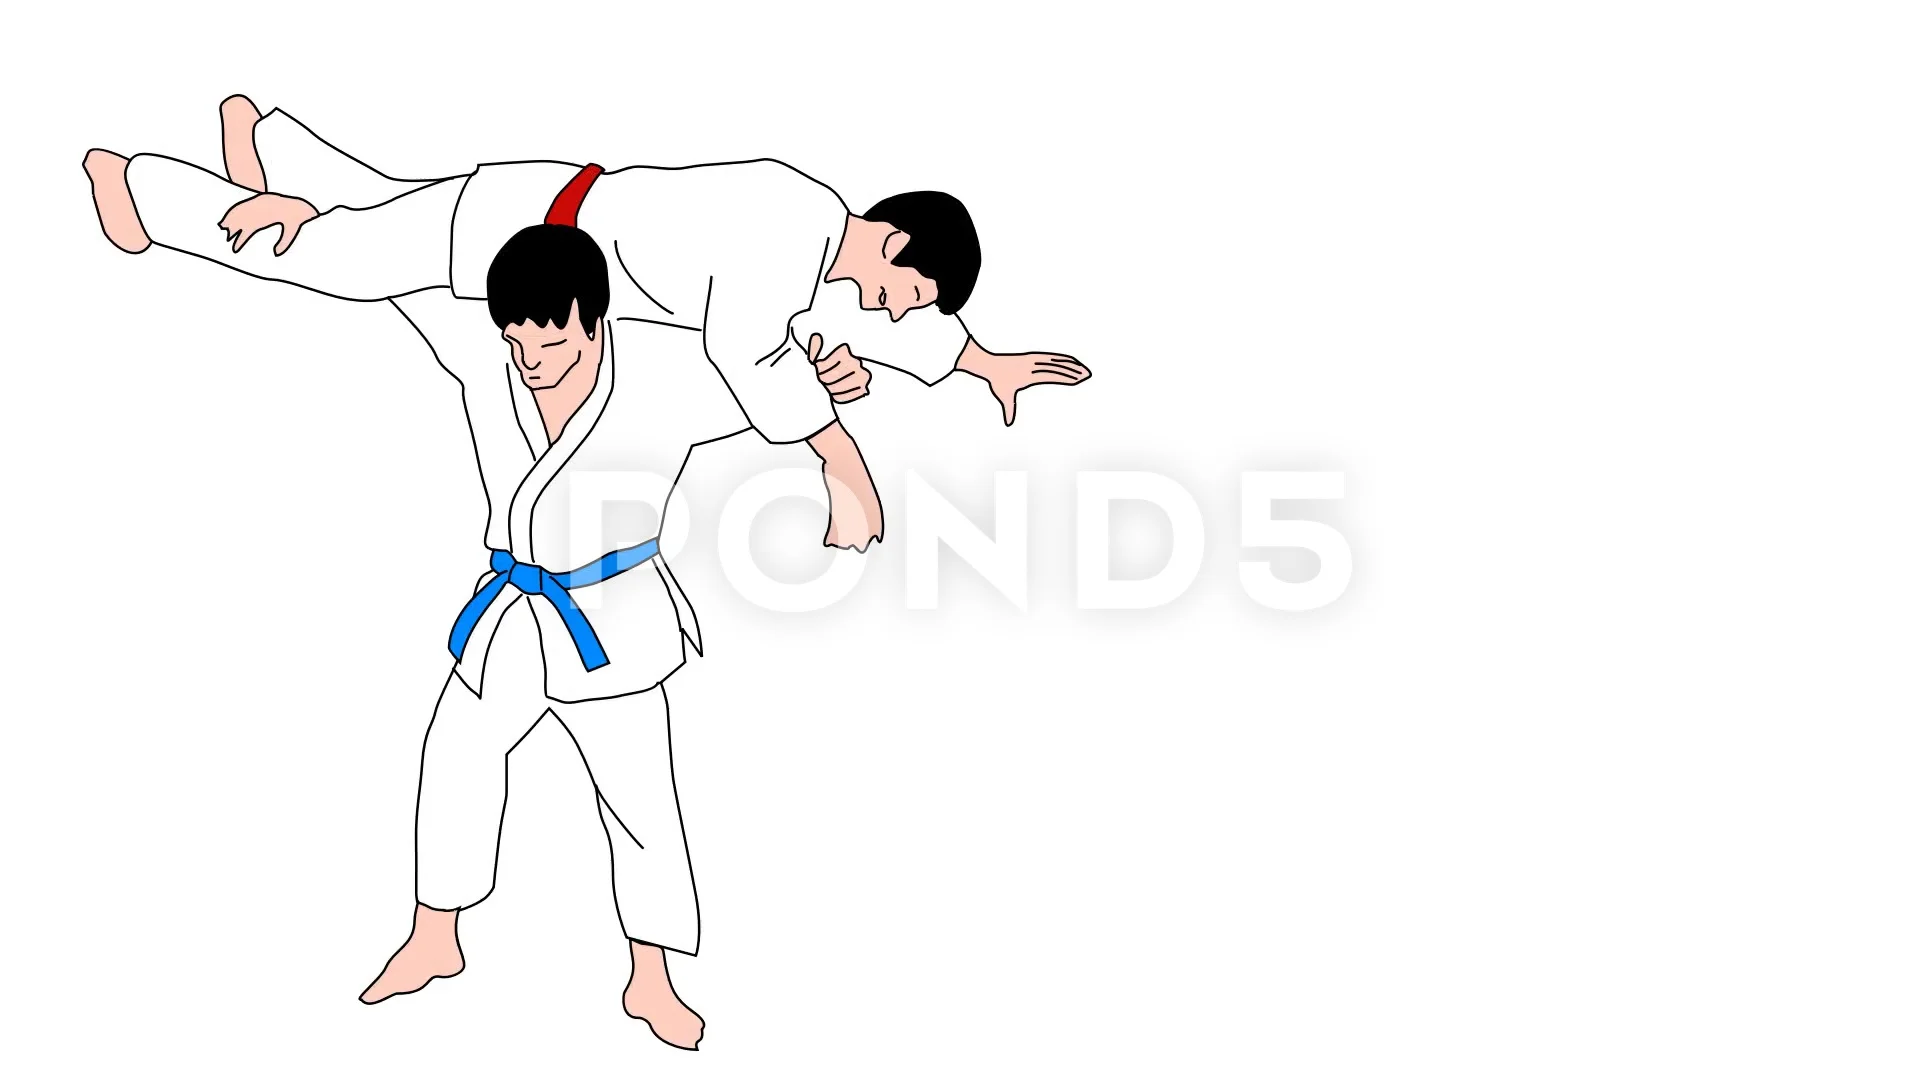 Premium Vector  Sketch judoist judoka athlete duel fight judo different  pack of sport figure silhouette outline